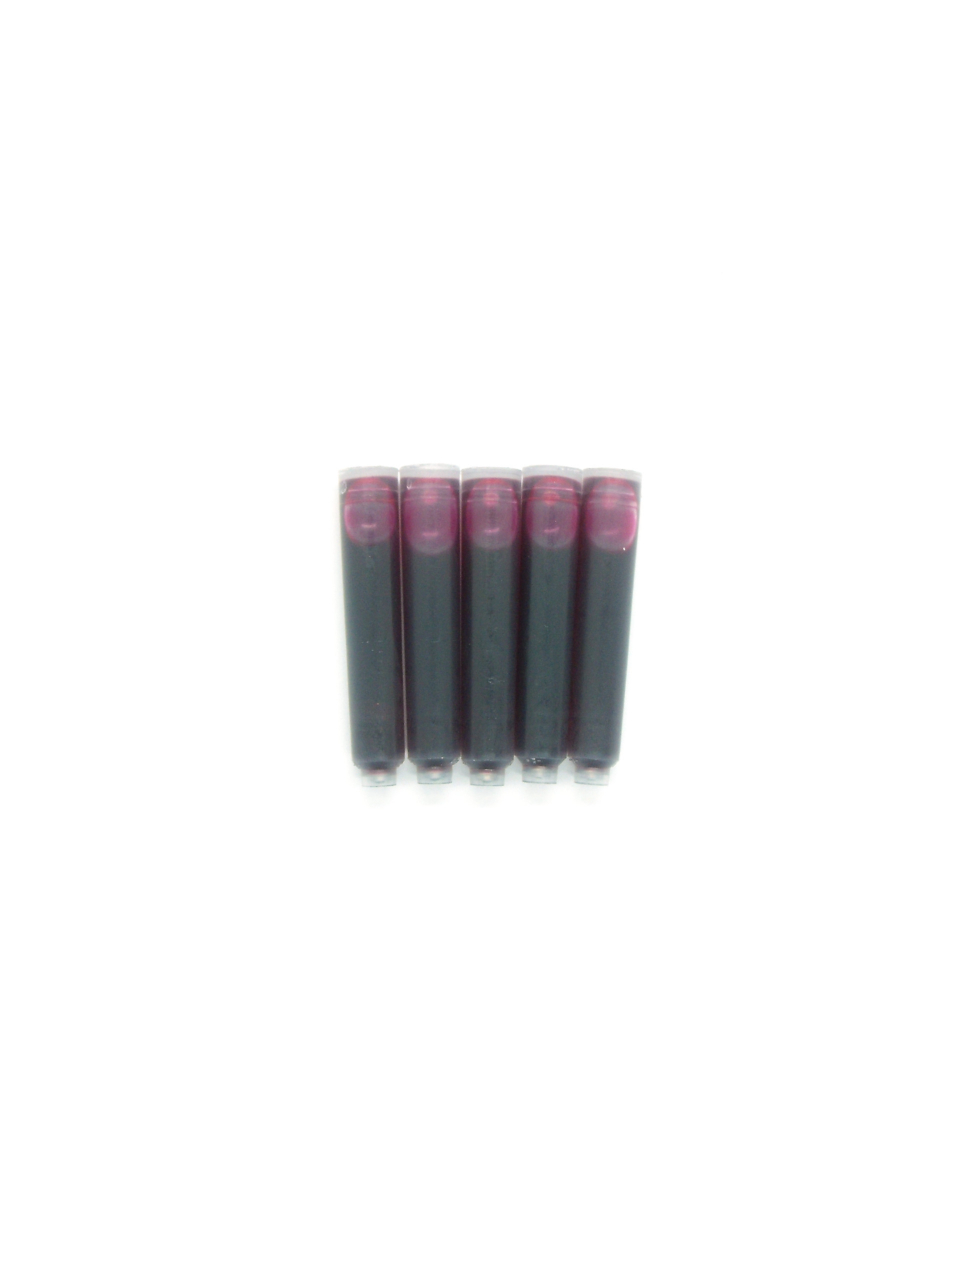 PenConverter Ink Cartridges For Tibaldi Fountain Pens (Pink)